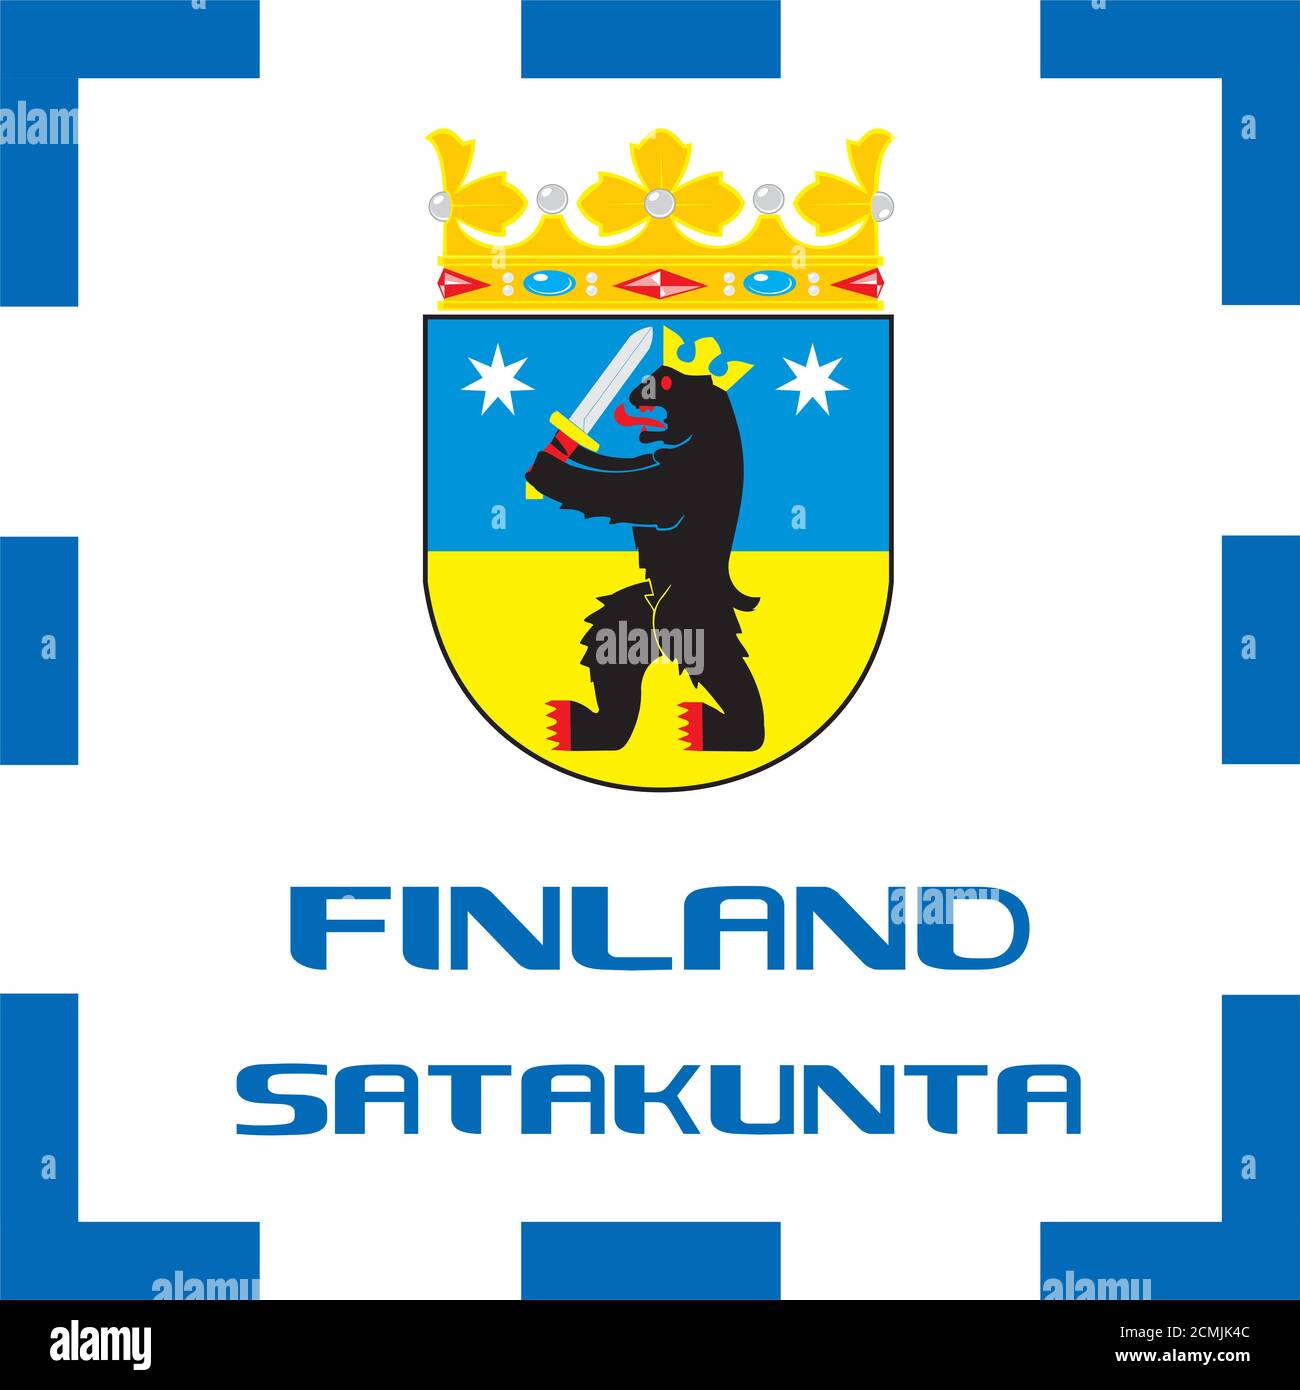 National ensigns, Flag and emblem of Finland - Satakunta Stock Photo